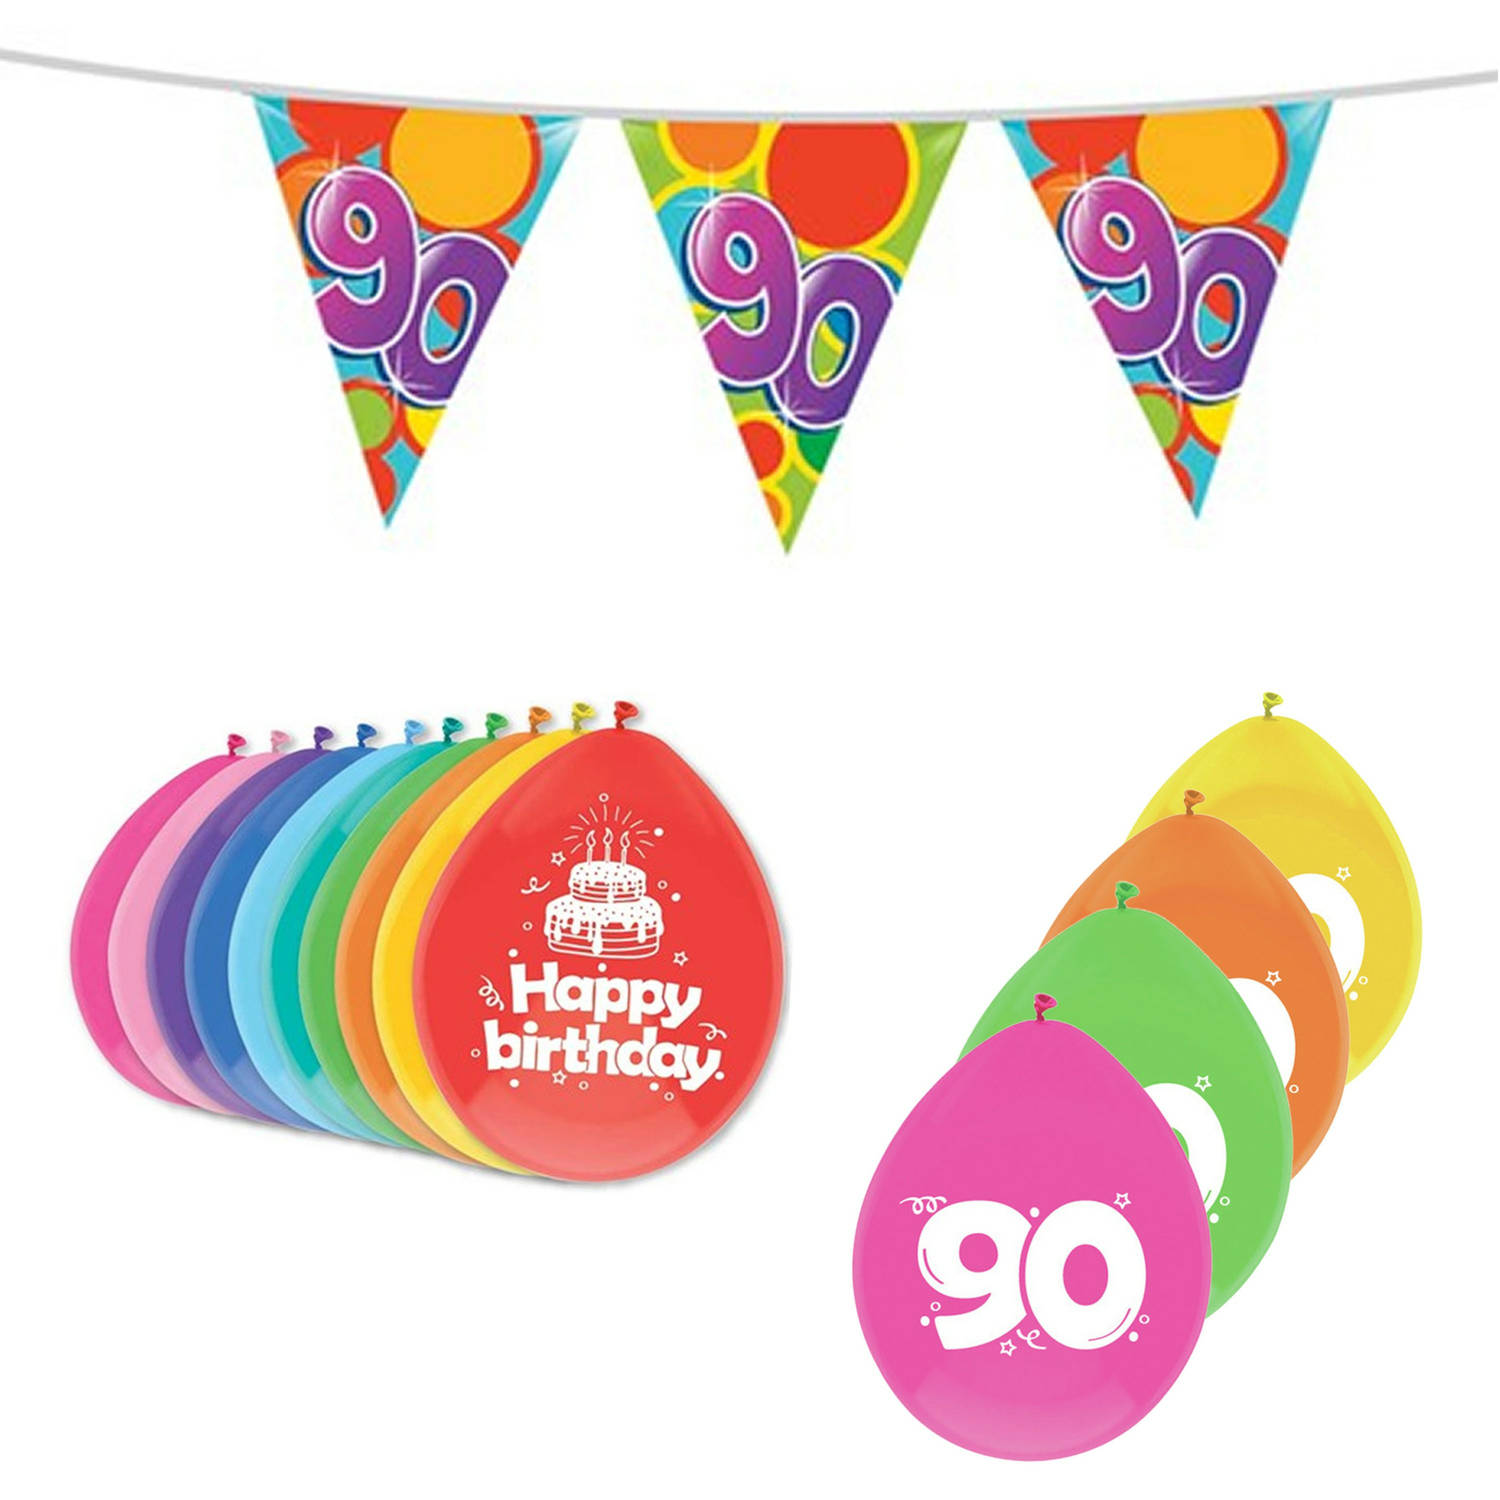 Leeftijd verjaardag thema 90 jaar pakket ballonnen/vlaggetjes - Feestpakketten